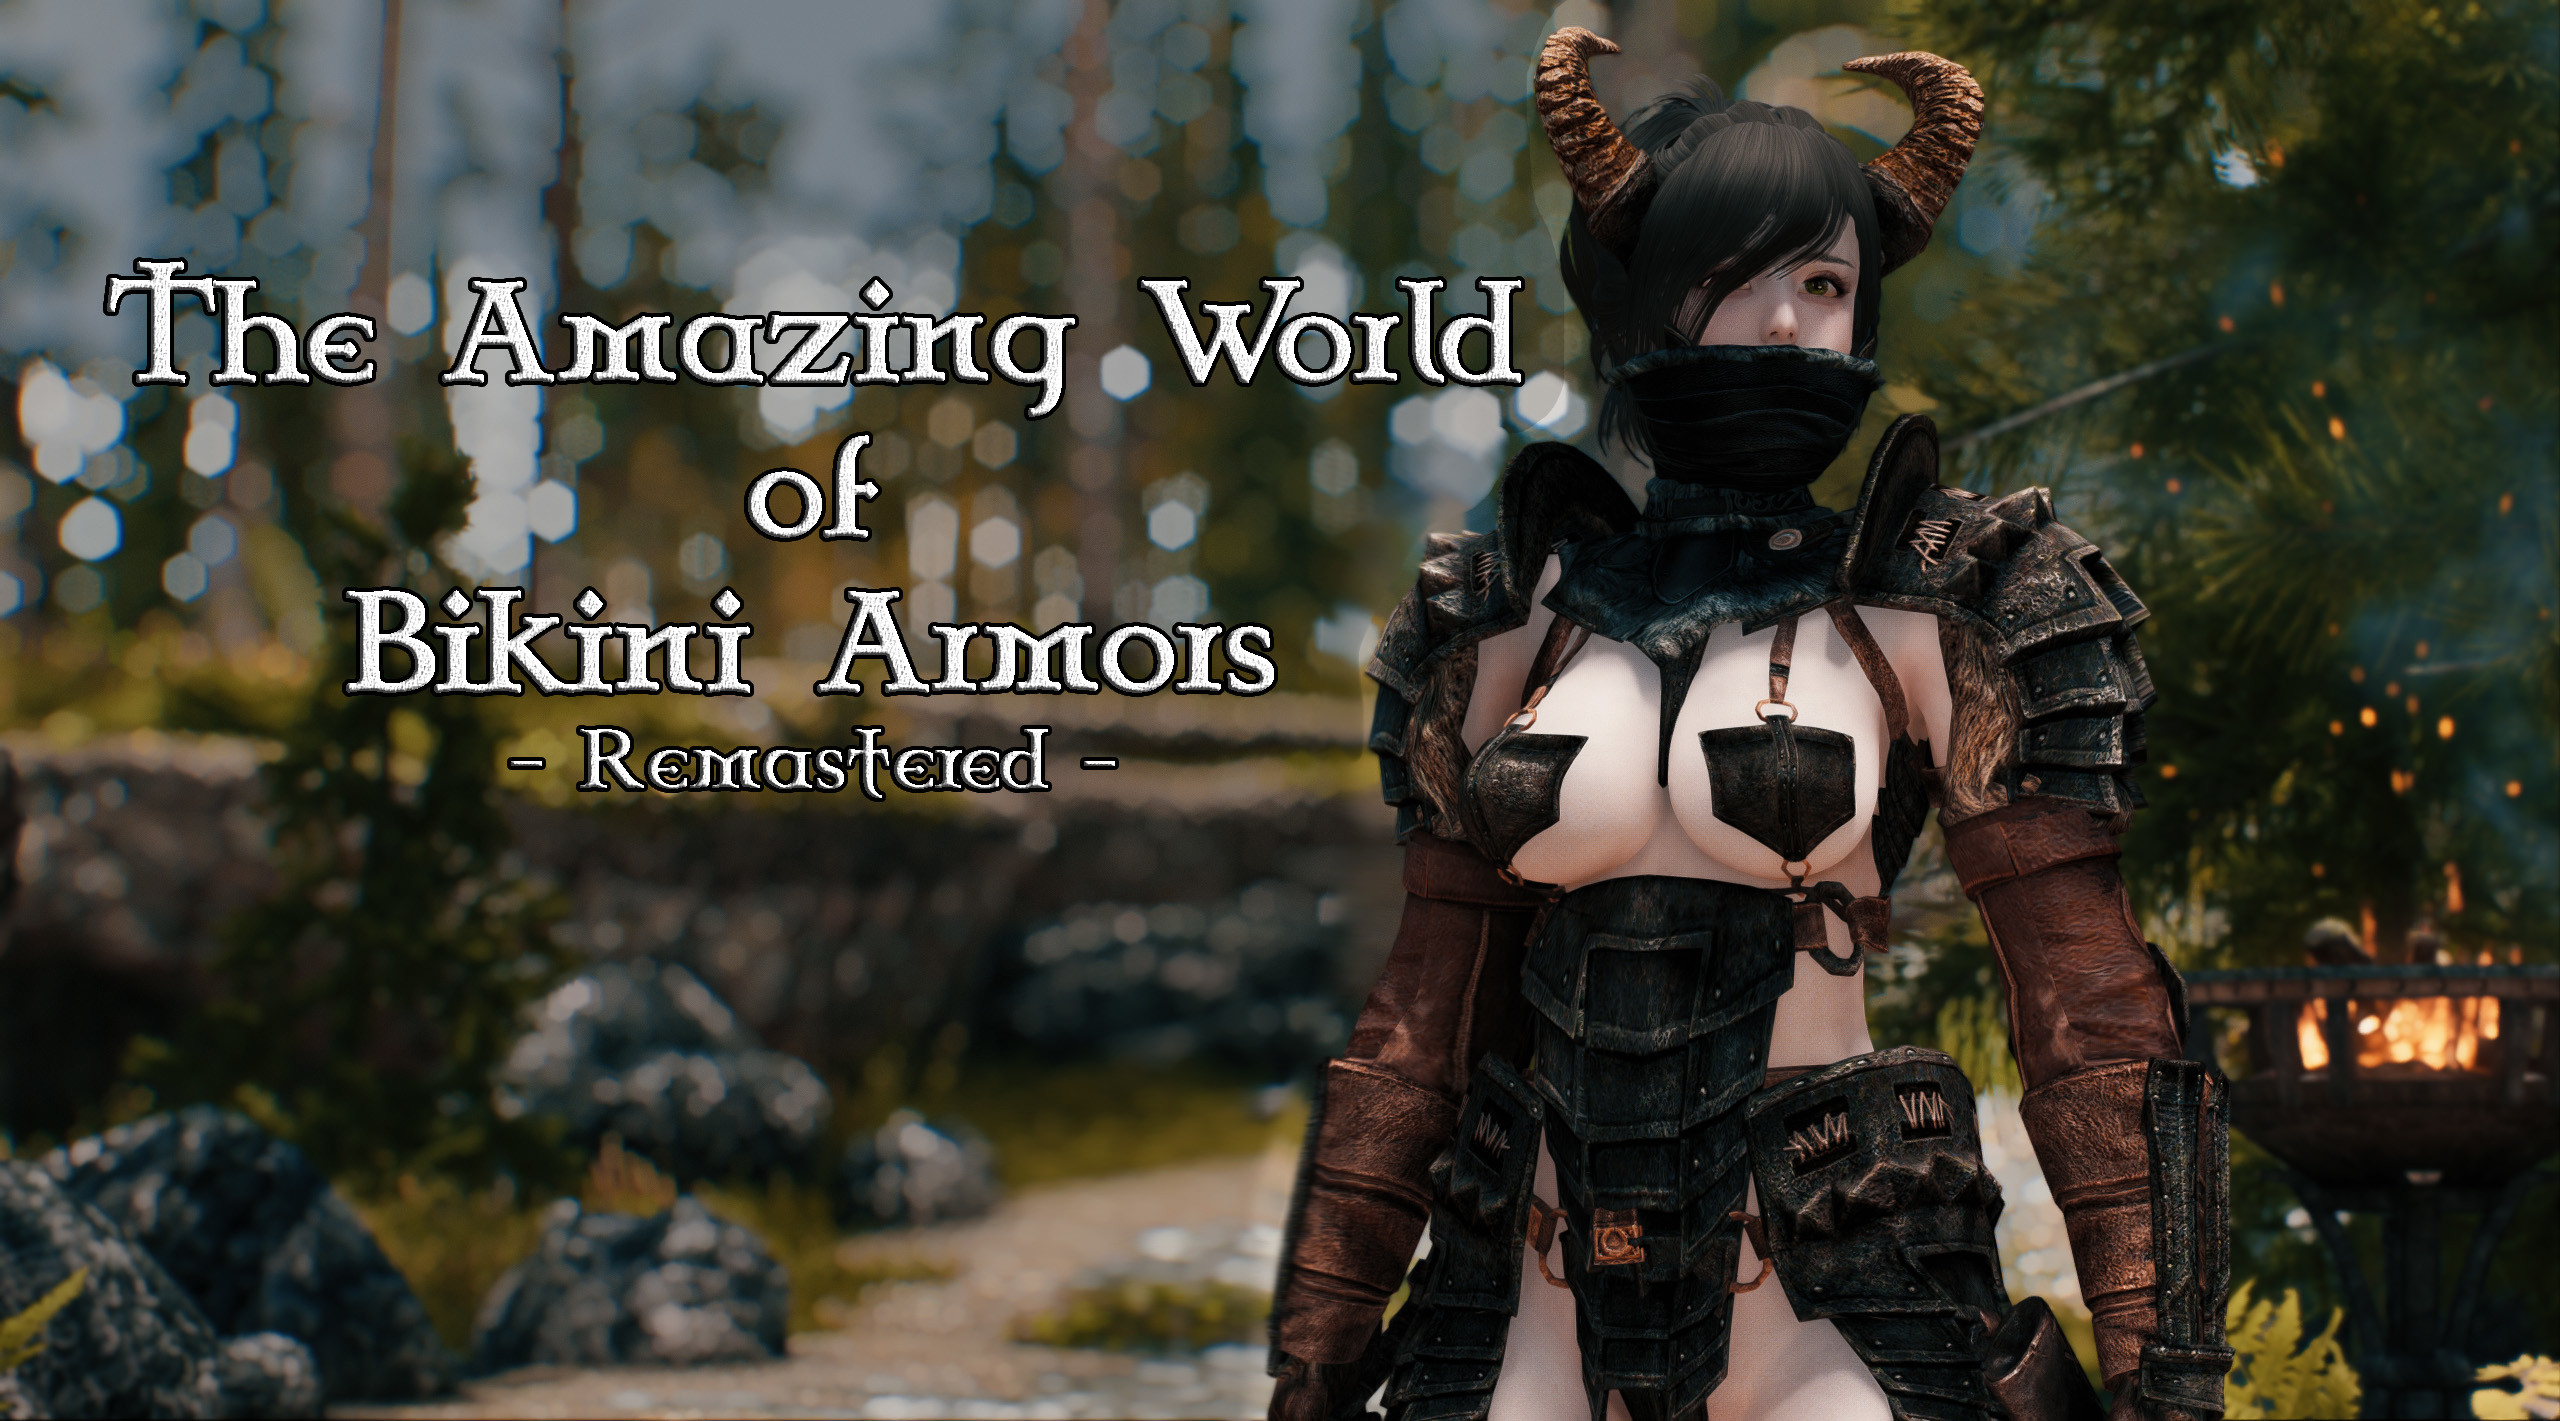 The Amazing World of Bikini Armors Remastered.